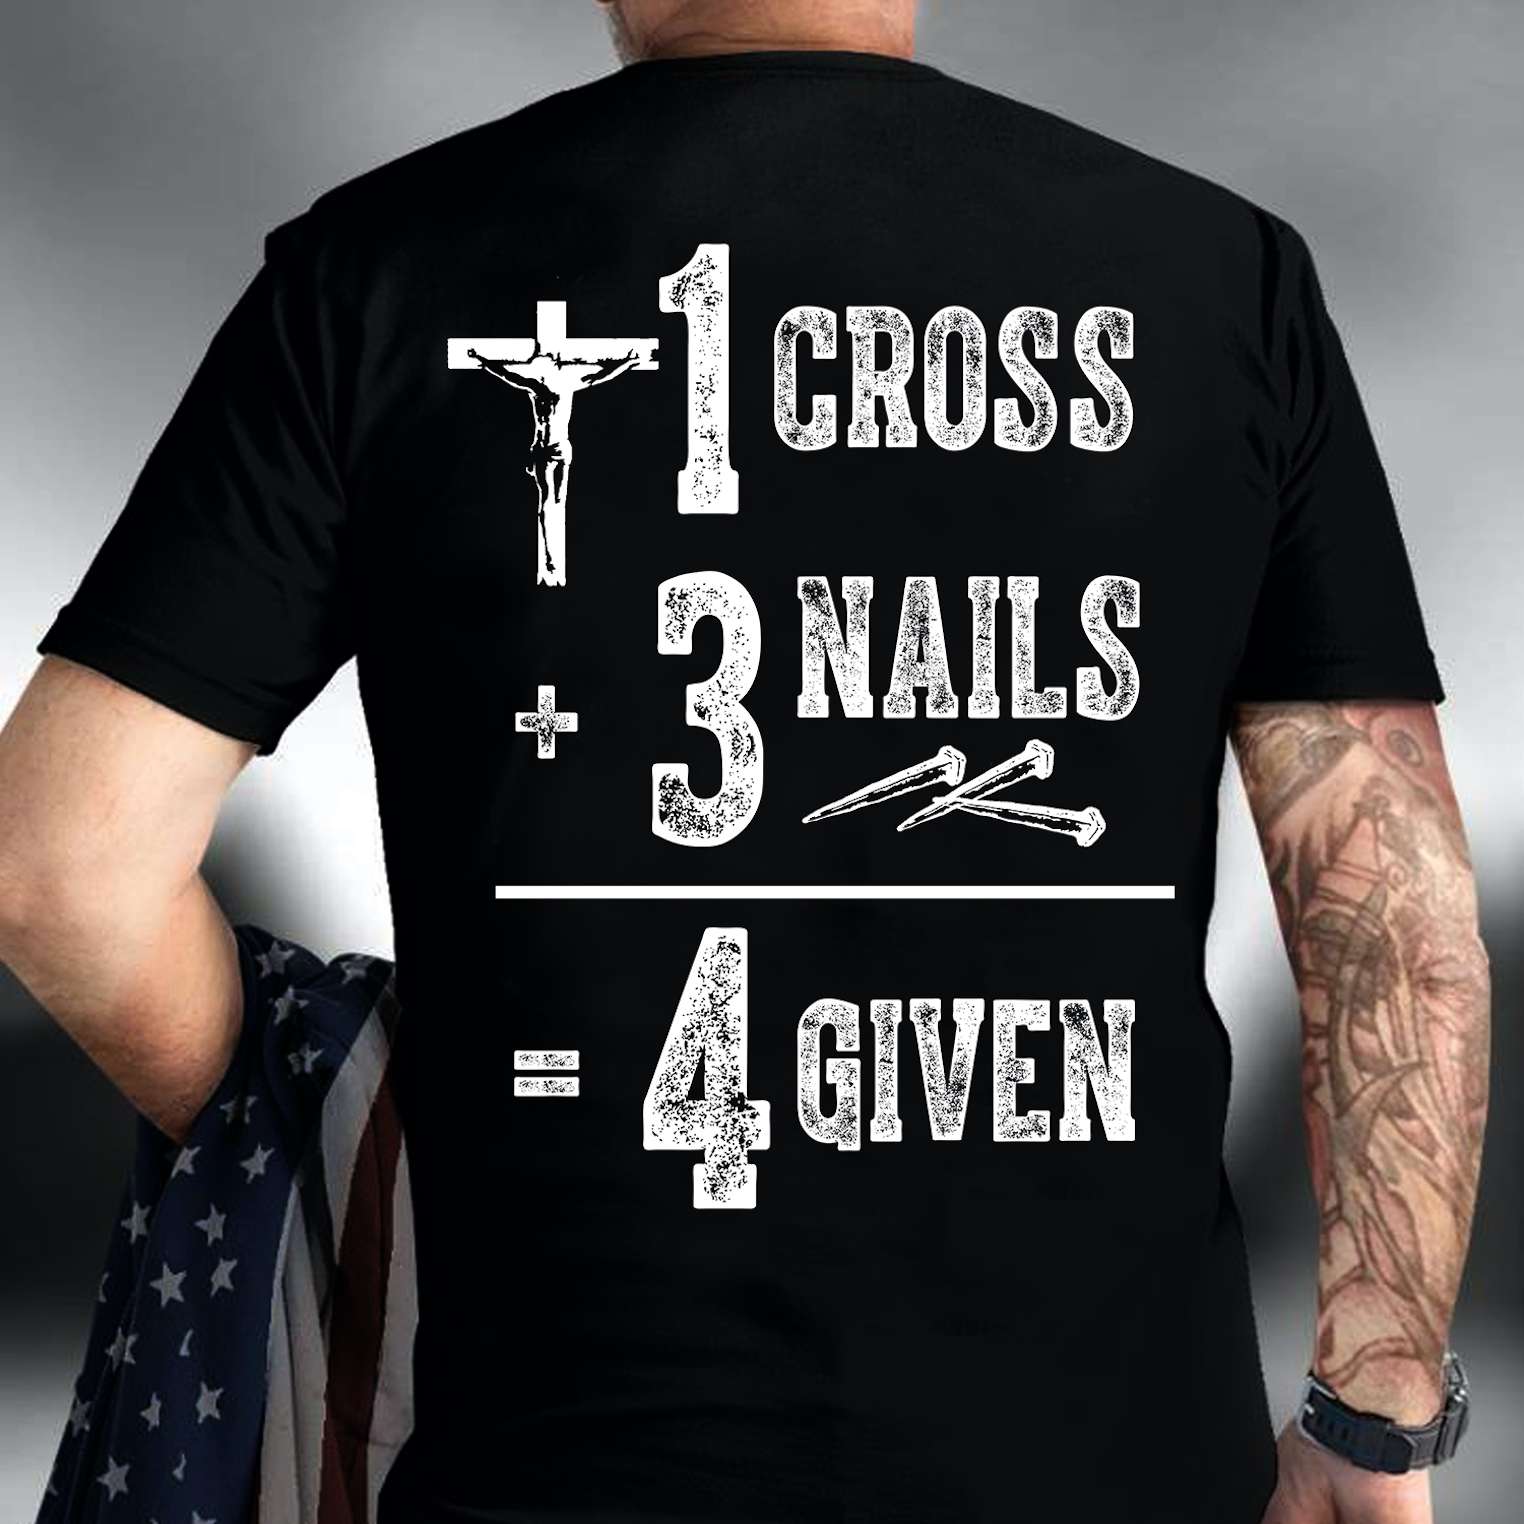 God's Cross - 1 Cross 3 nails 4 given